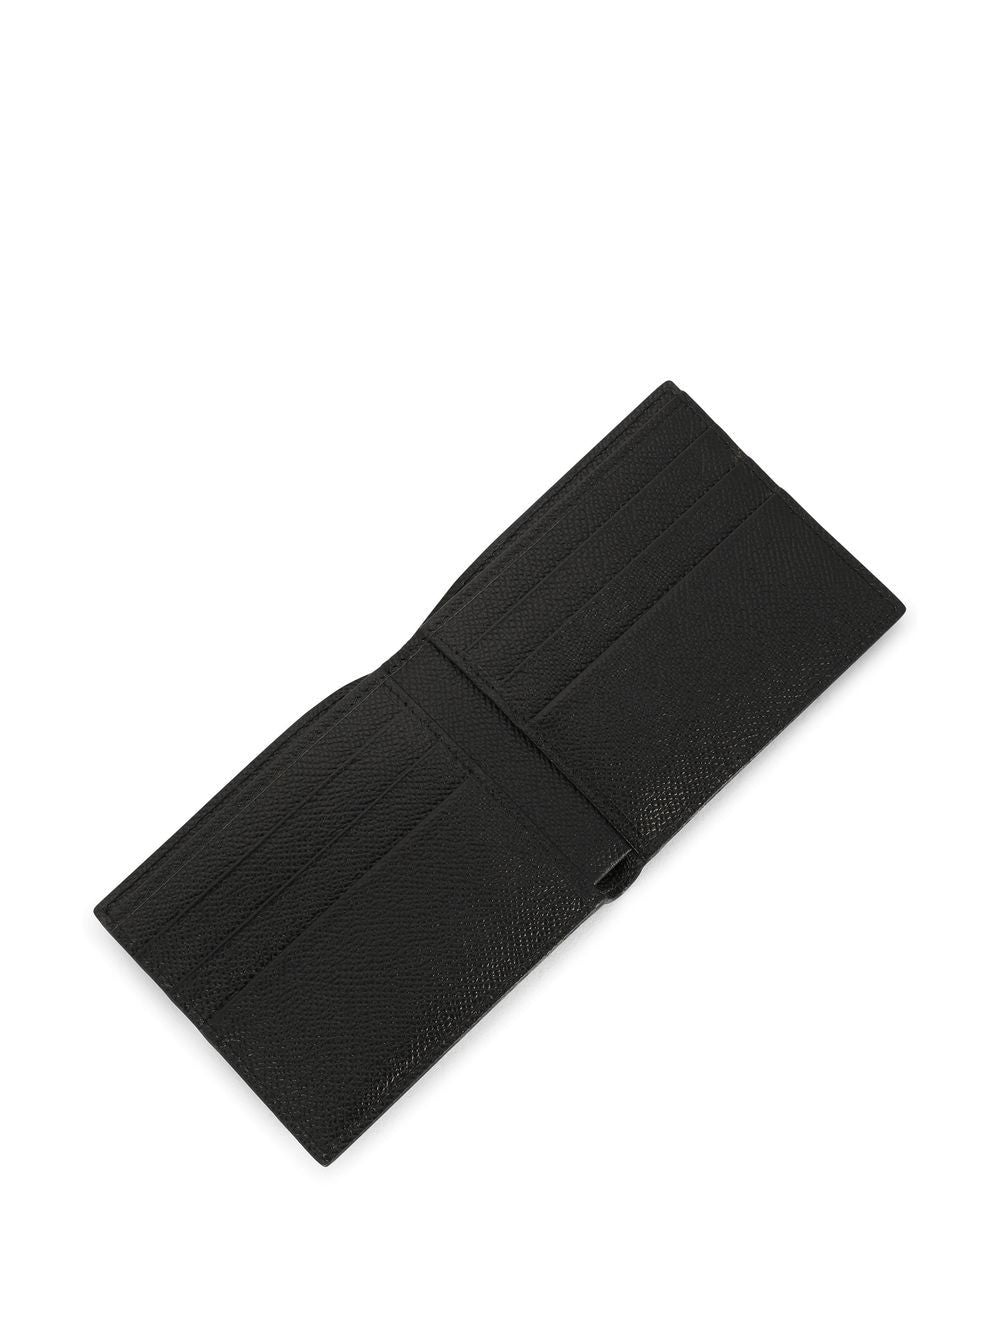 Logo-tag leather bifold wallet<BR/><BR/><BR/>